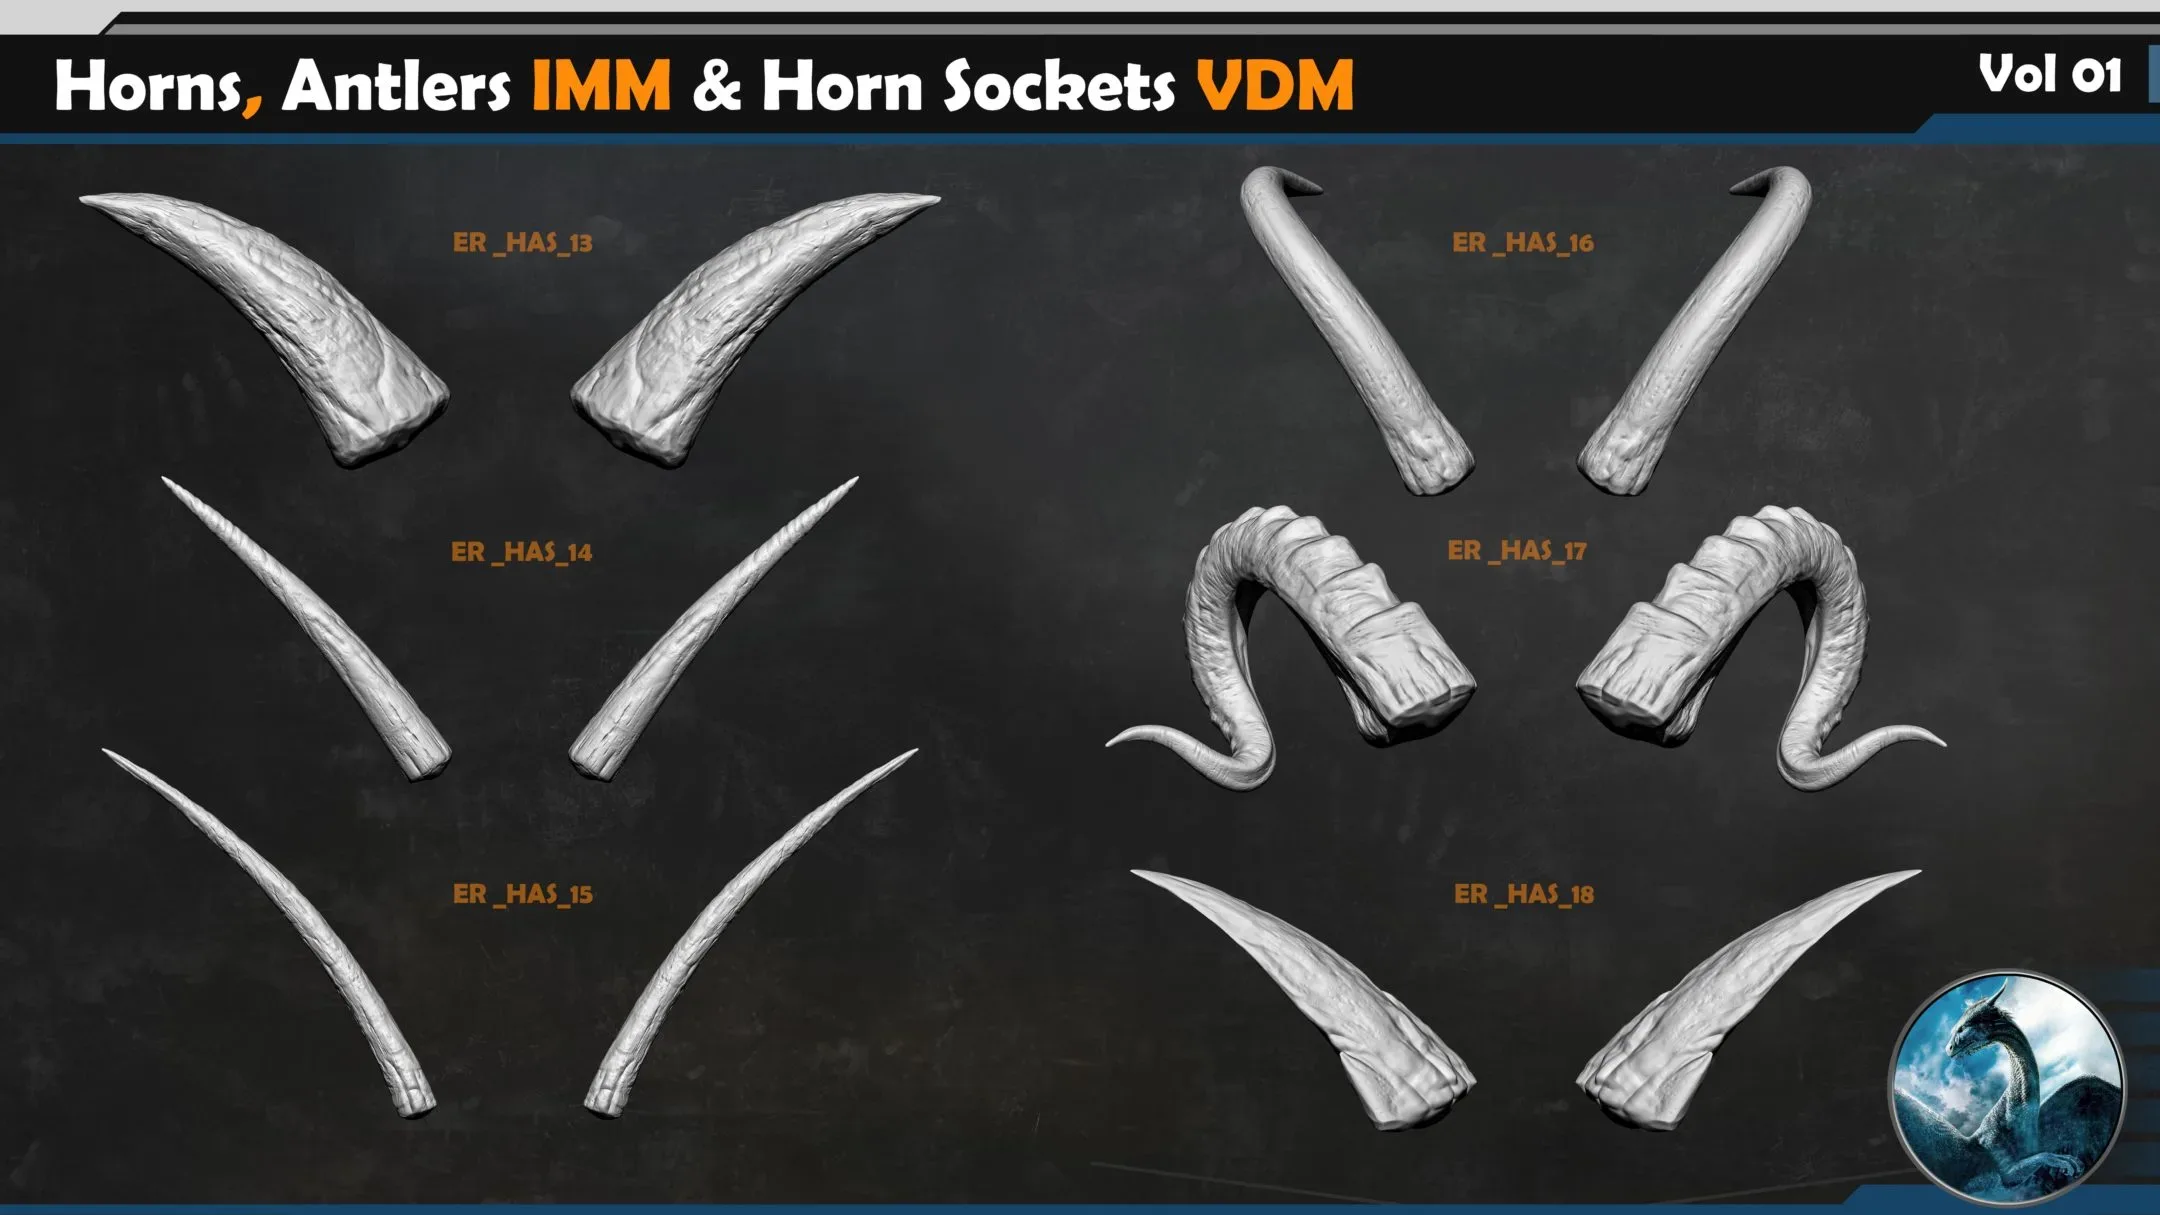 50 Horns, Antlers IMM & Horn Sockets VDM _Vol 01